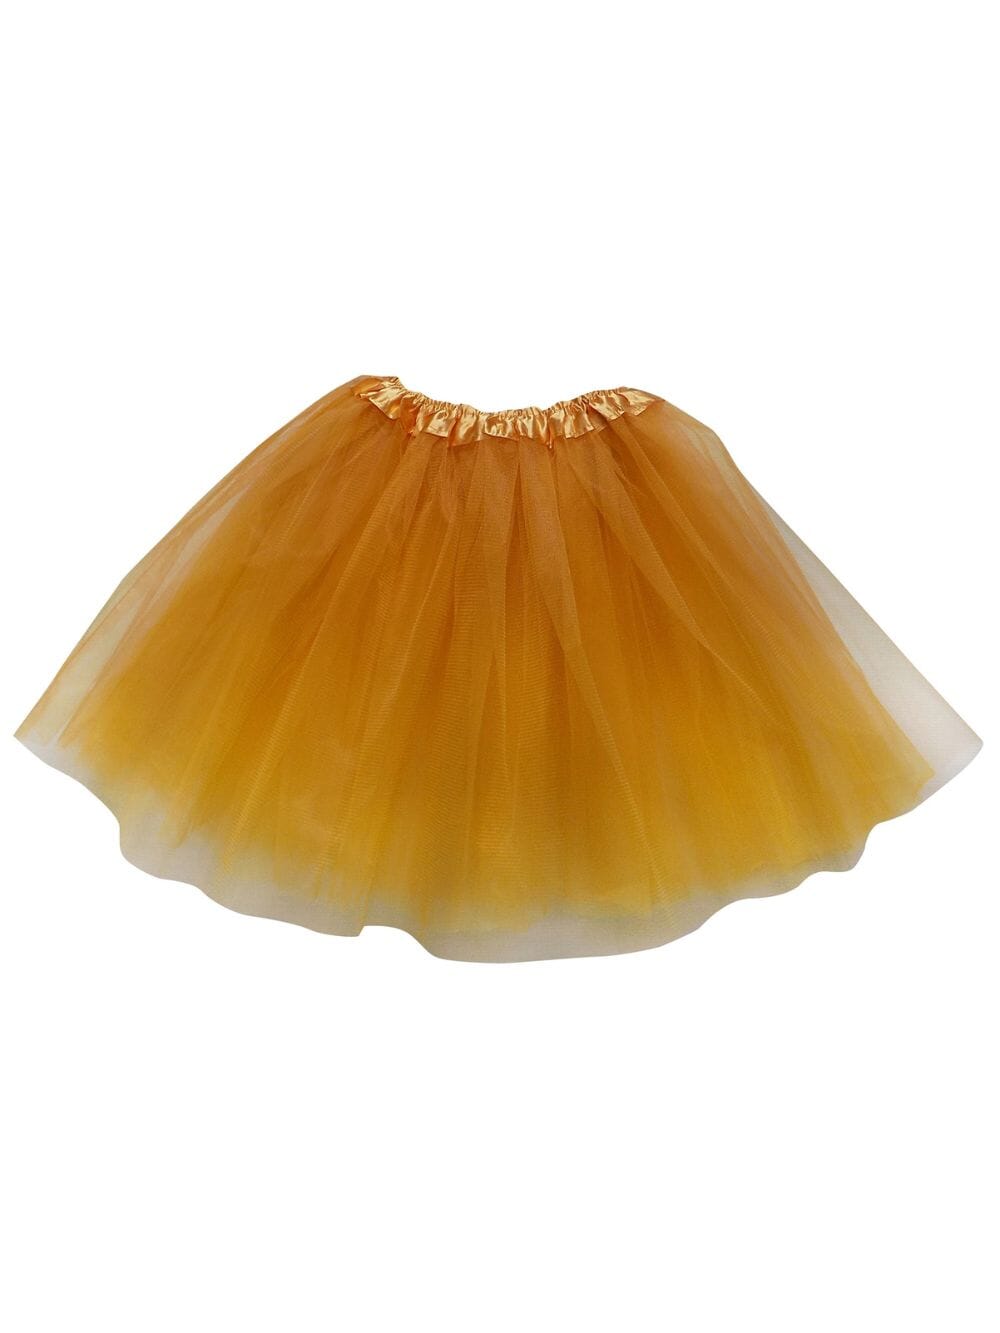 Gold Plus Size Adult Tutu Skirt - Women's Plus Size 3- Layer Basic Ballet Costume Dance Tutus - Sydney So Sweet